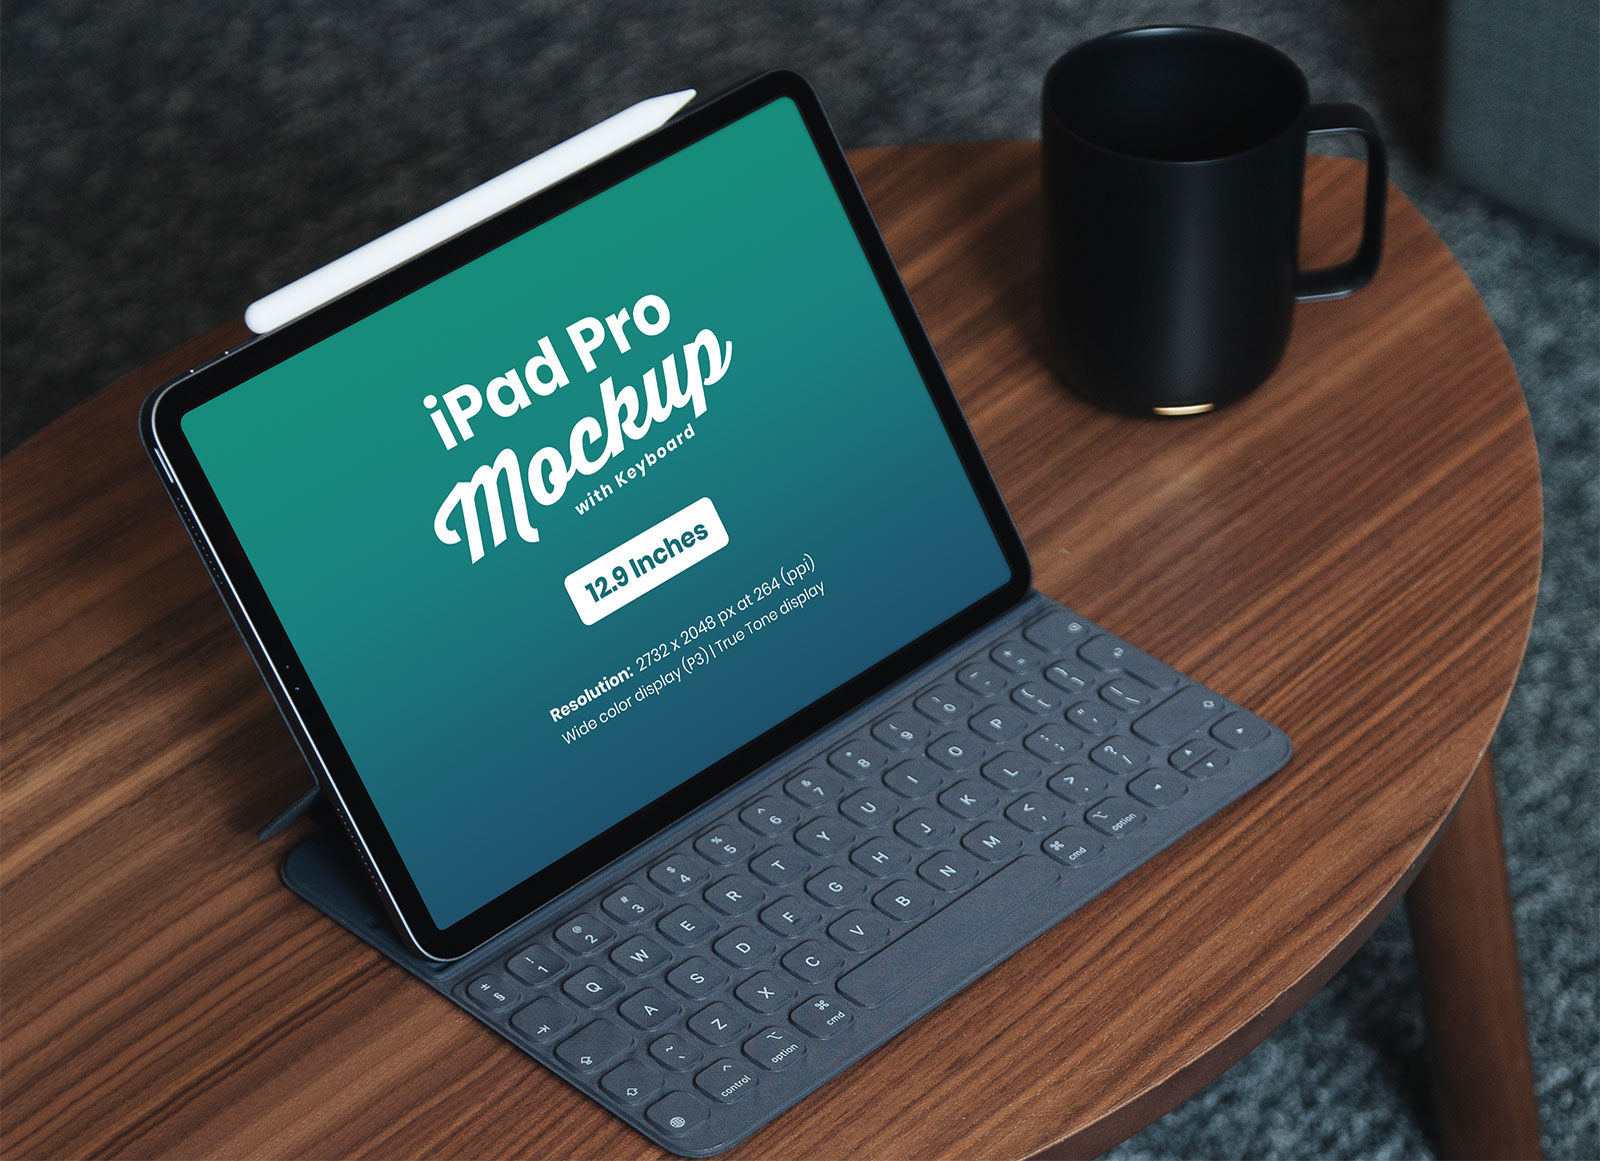 Free-iPad-Pro-2018-Mockup-PSD-with-Keyboard-12.9-Inches